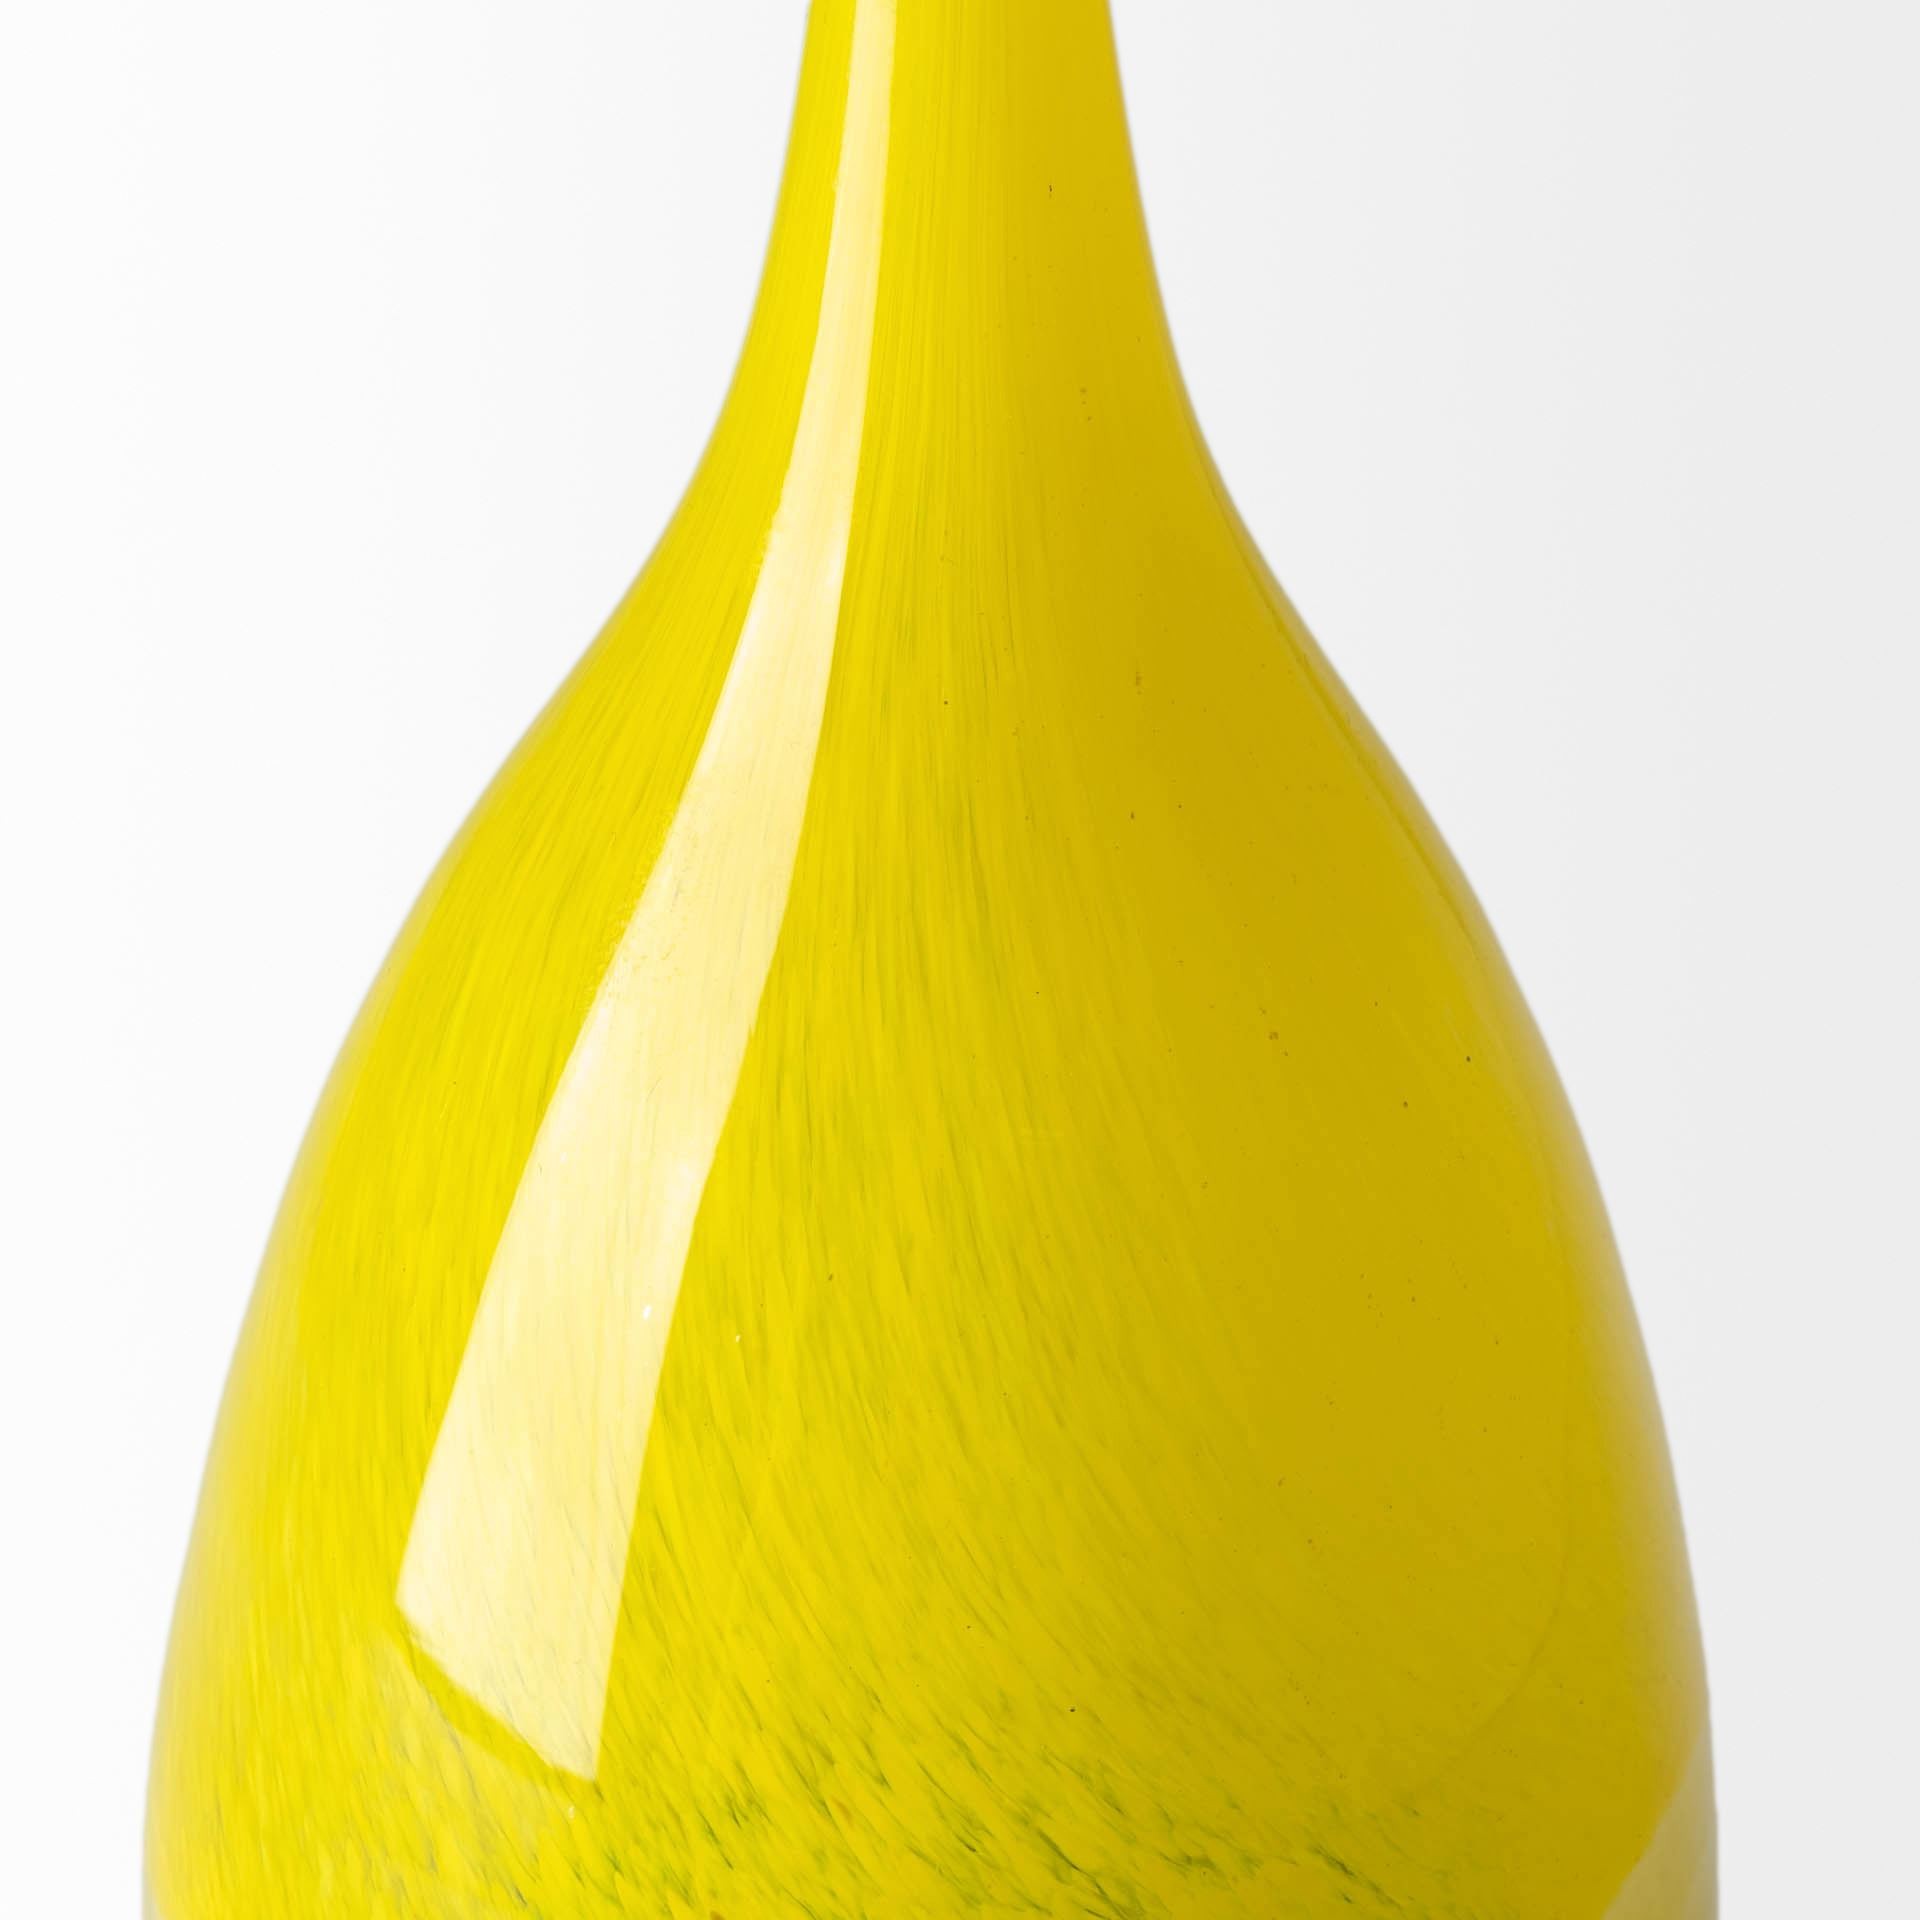 19" Lovely Yellow and Gray Handblown Spunglass Vase